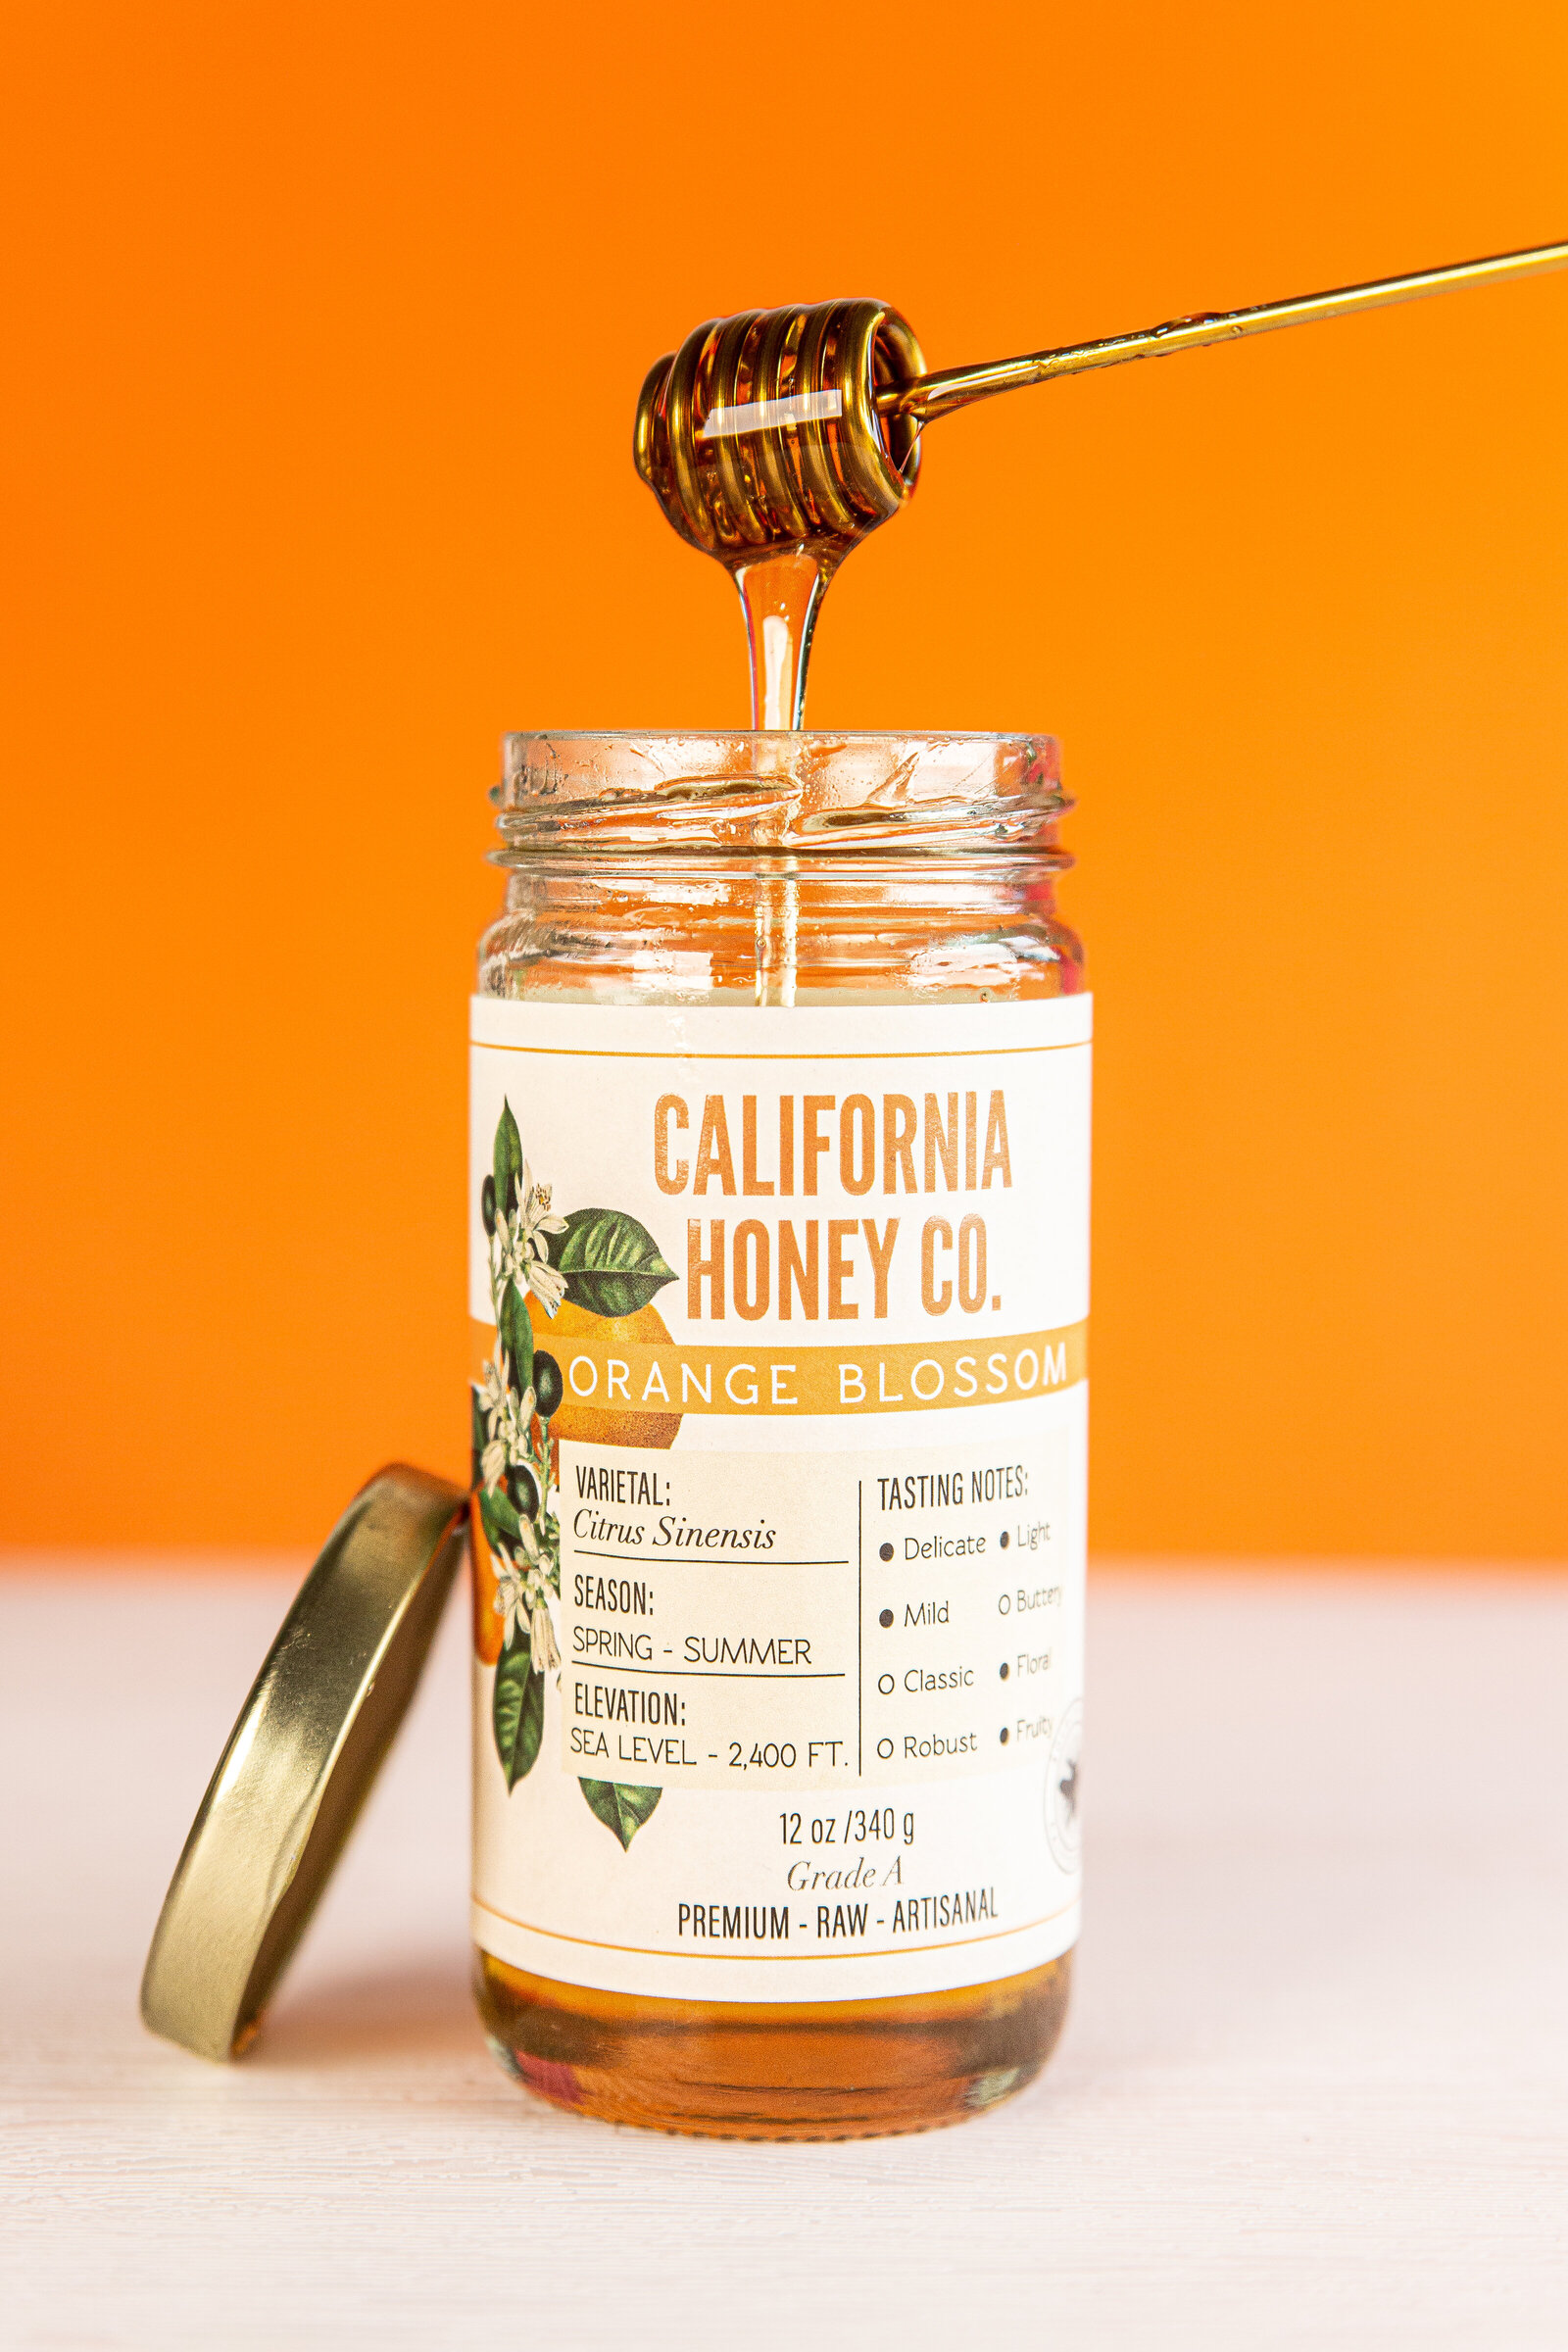 Chelsea Loren styled honey product photography with orange backdrop for Orange Blossom California Honey Co.